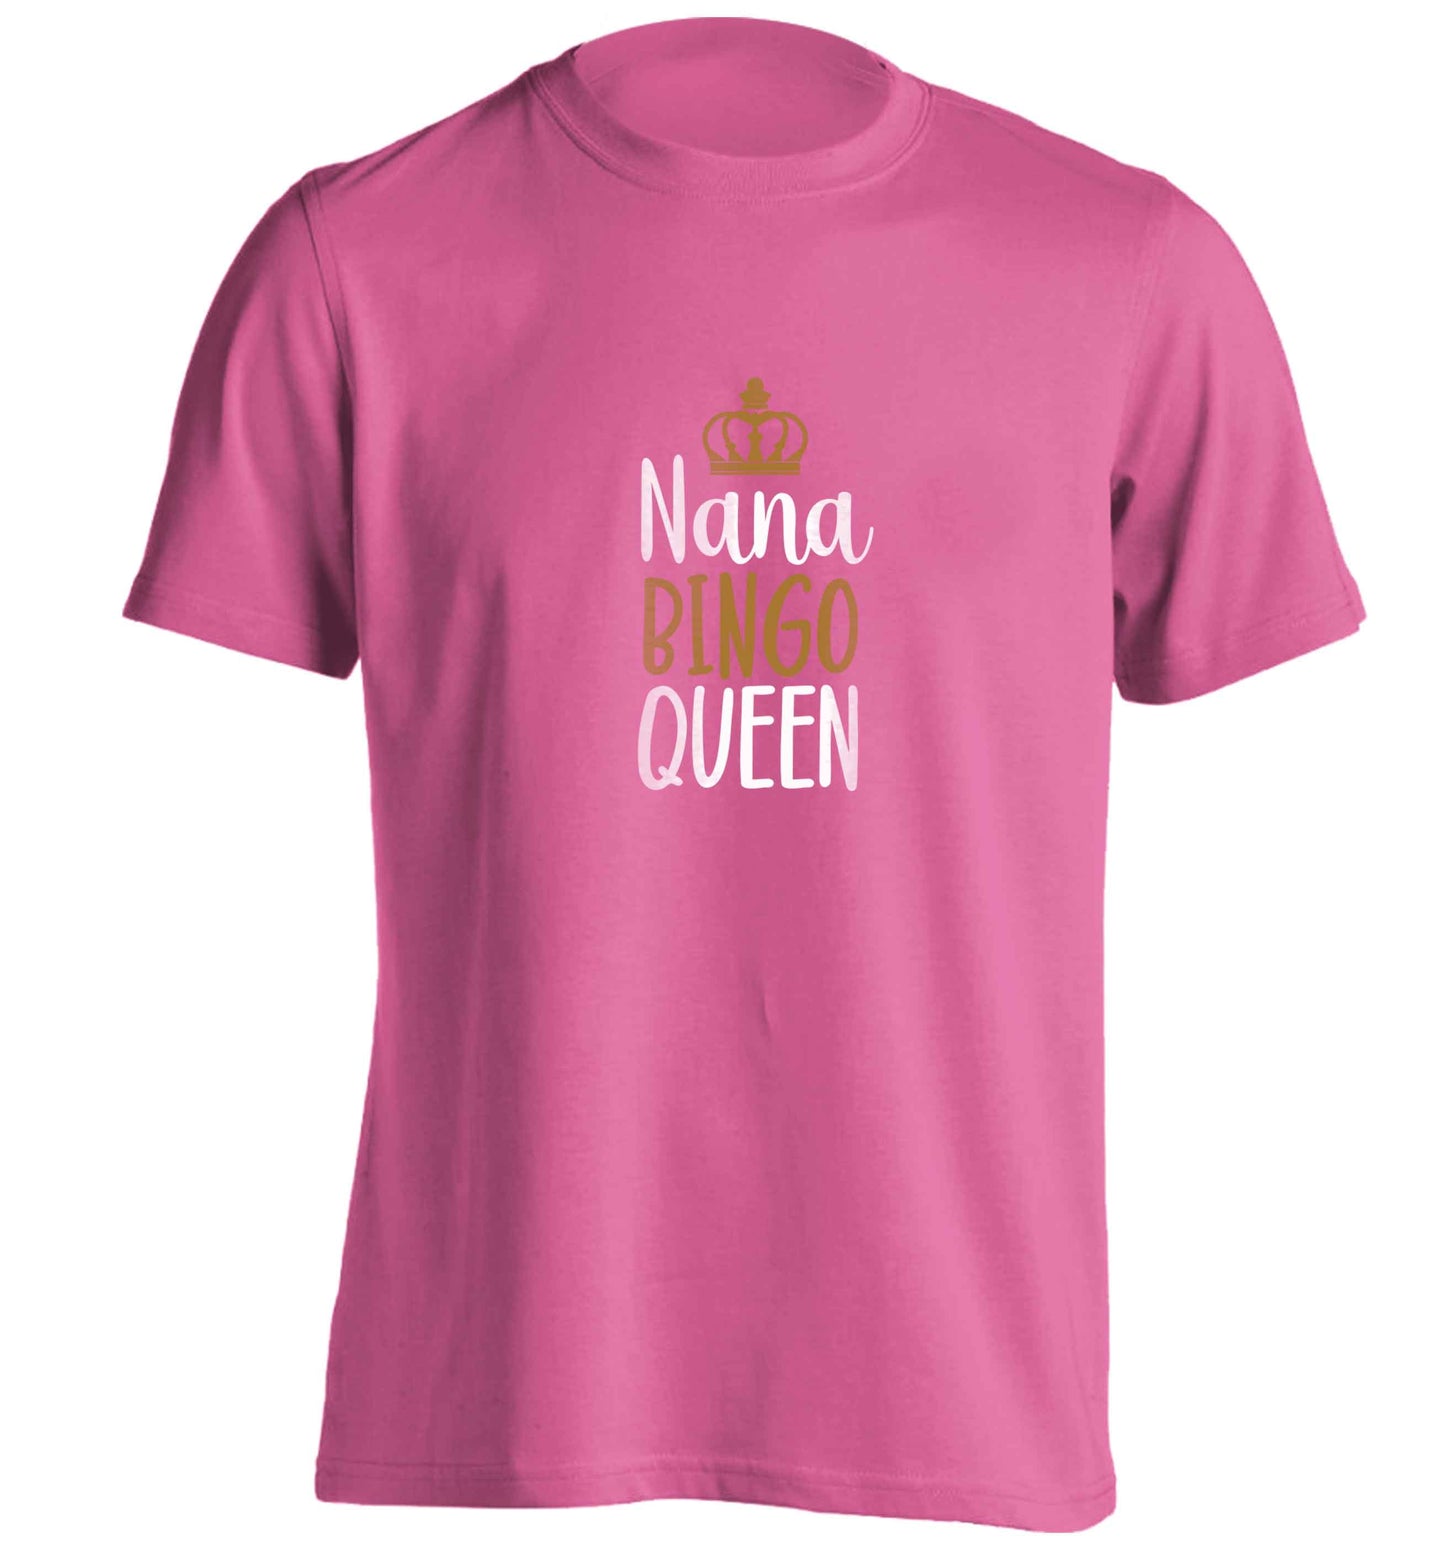 Personalised bingo queen adults unisex pink Tshirt 2XL